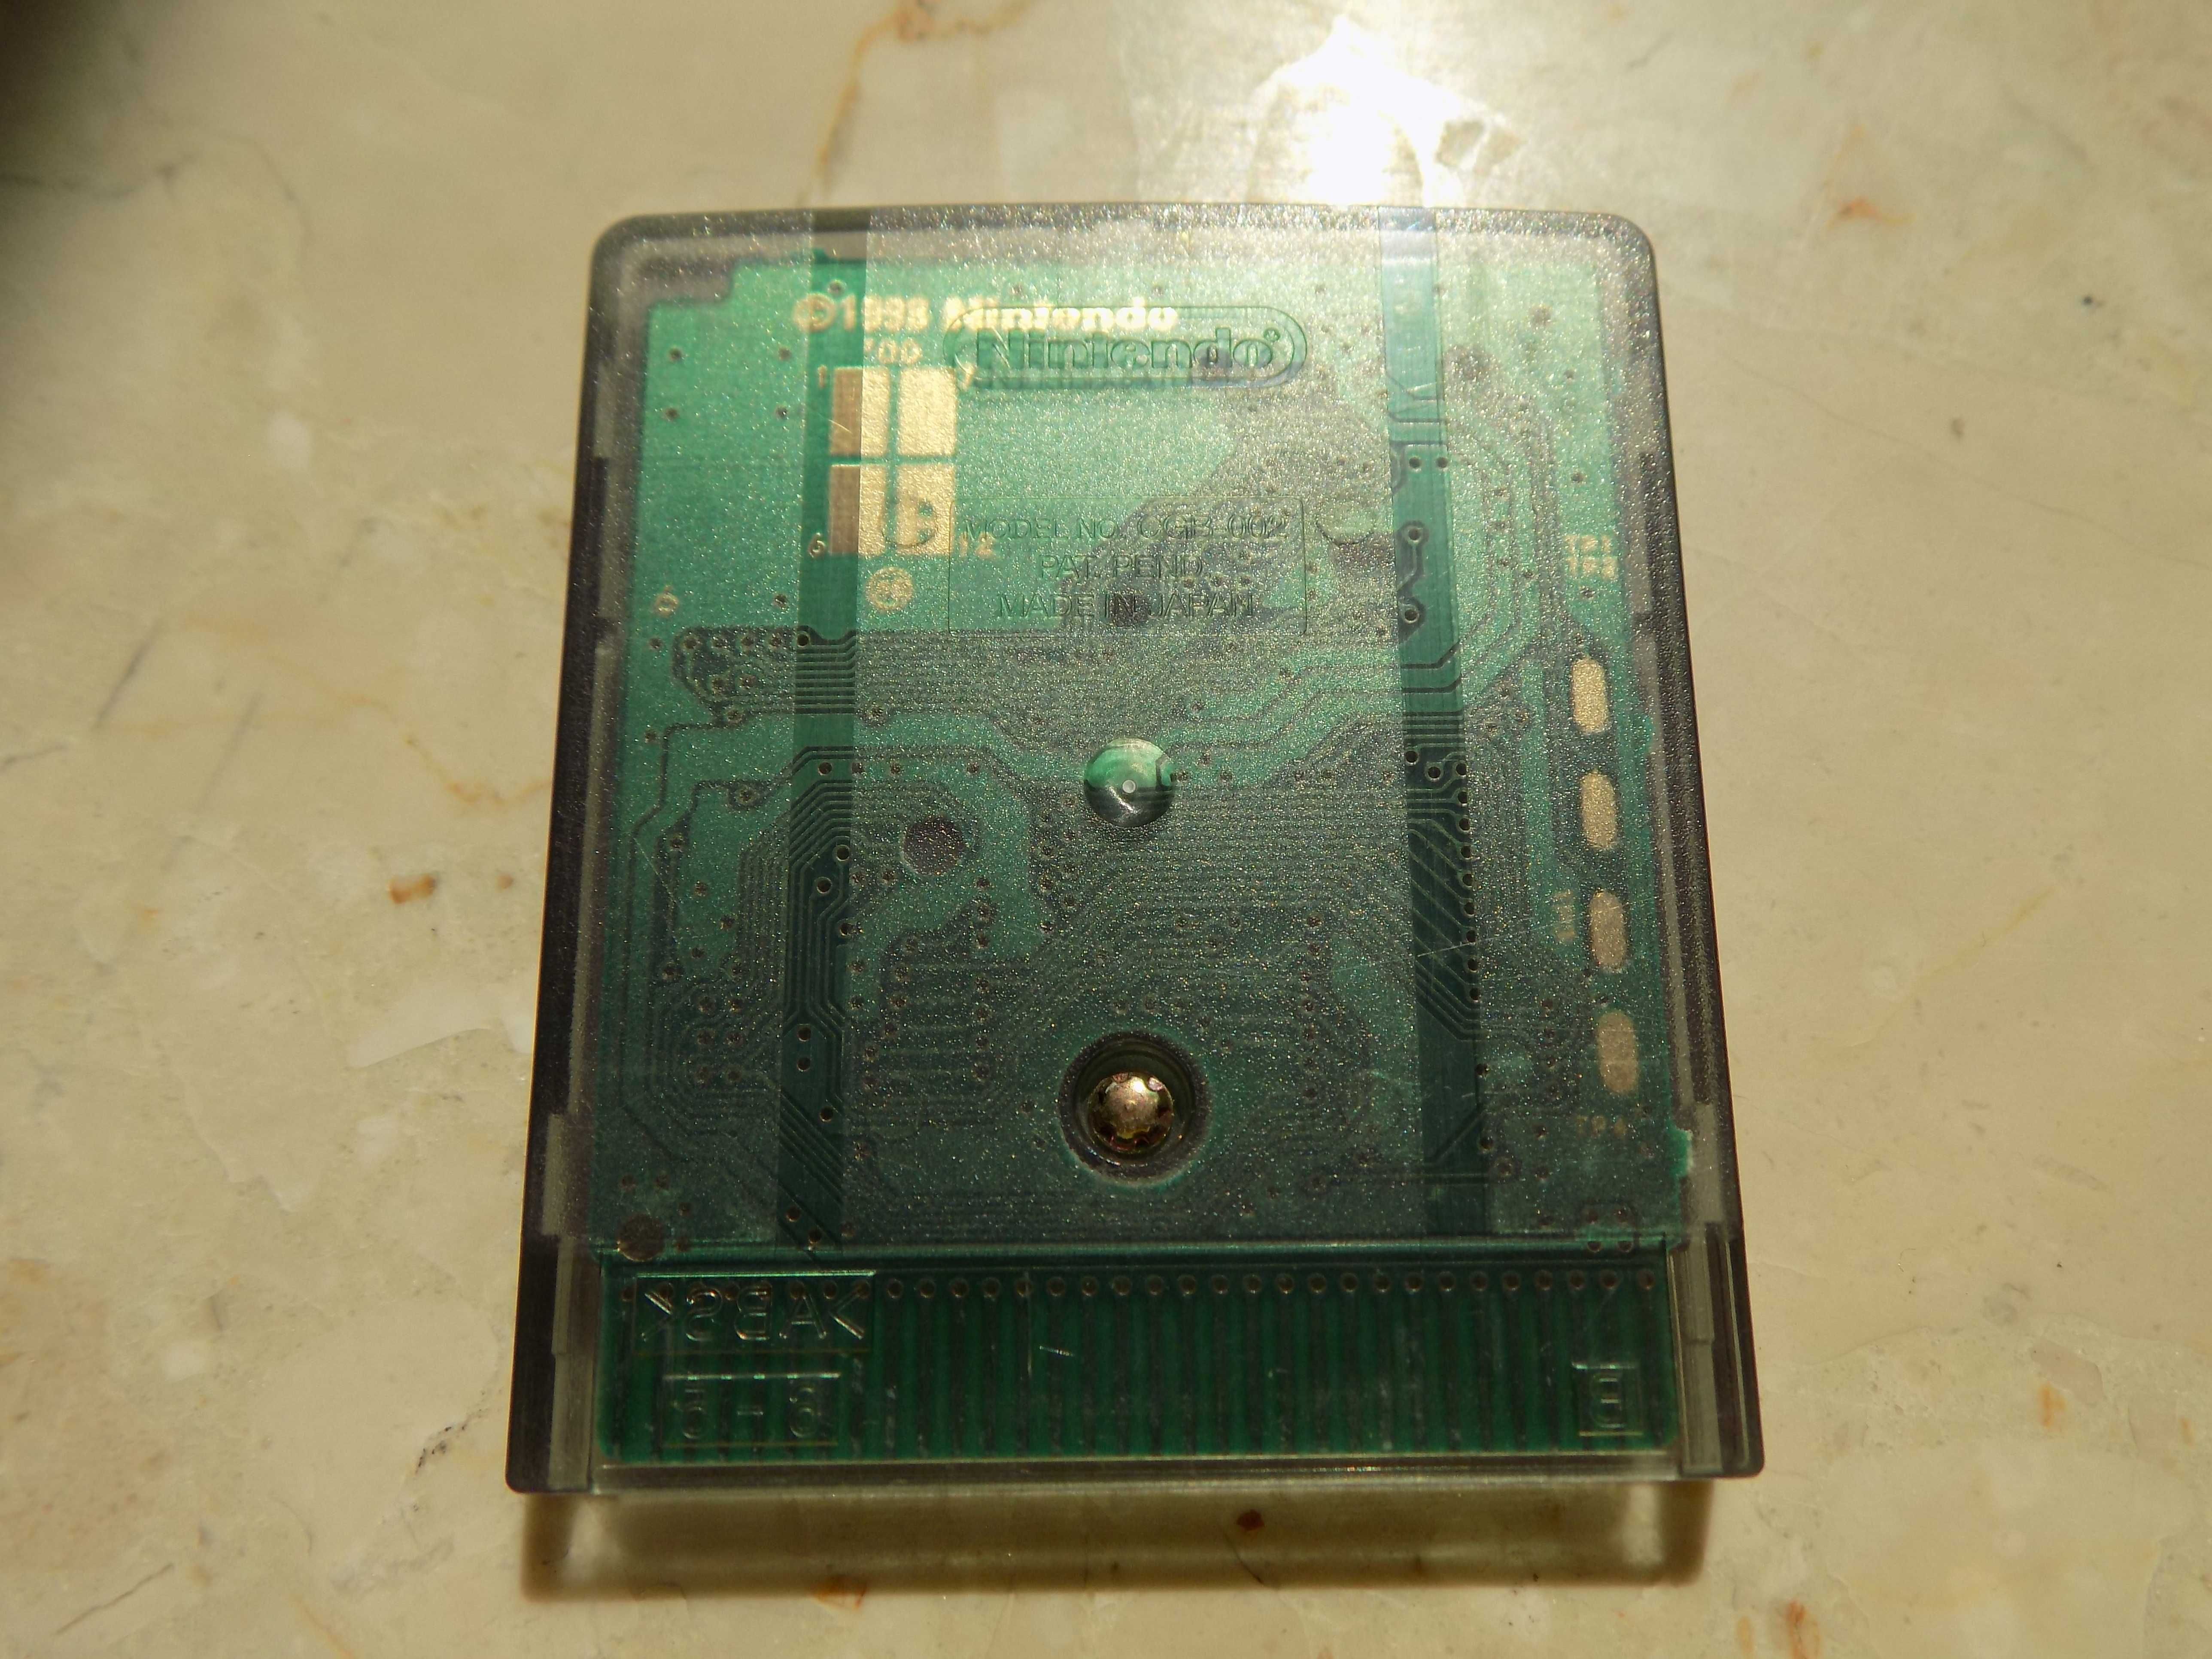 Mario Tennis GB (Jpn) na Nintendo Game Boy Color (GBC),advance/GBA SP